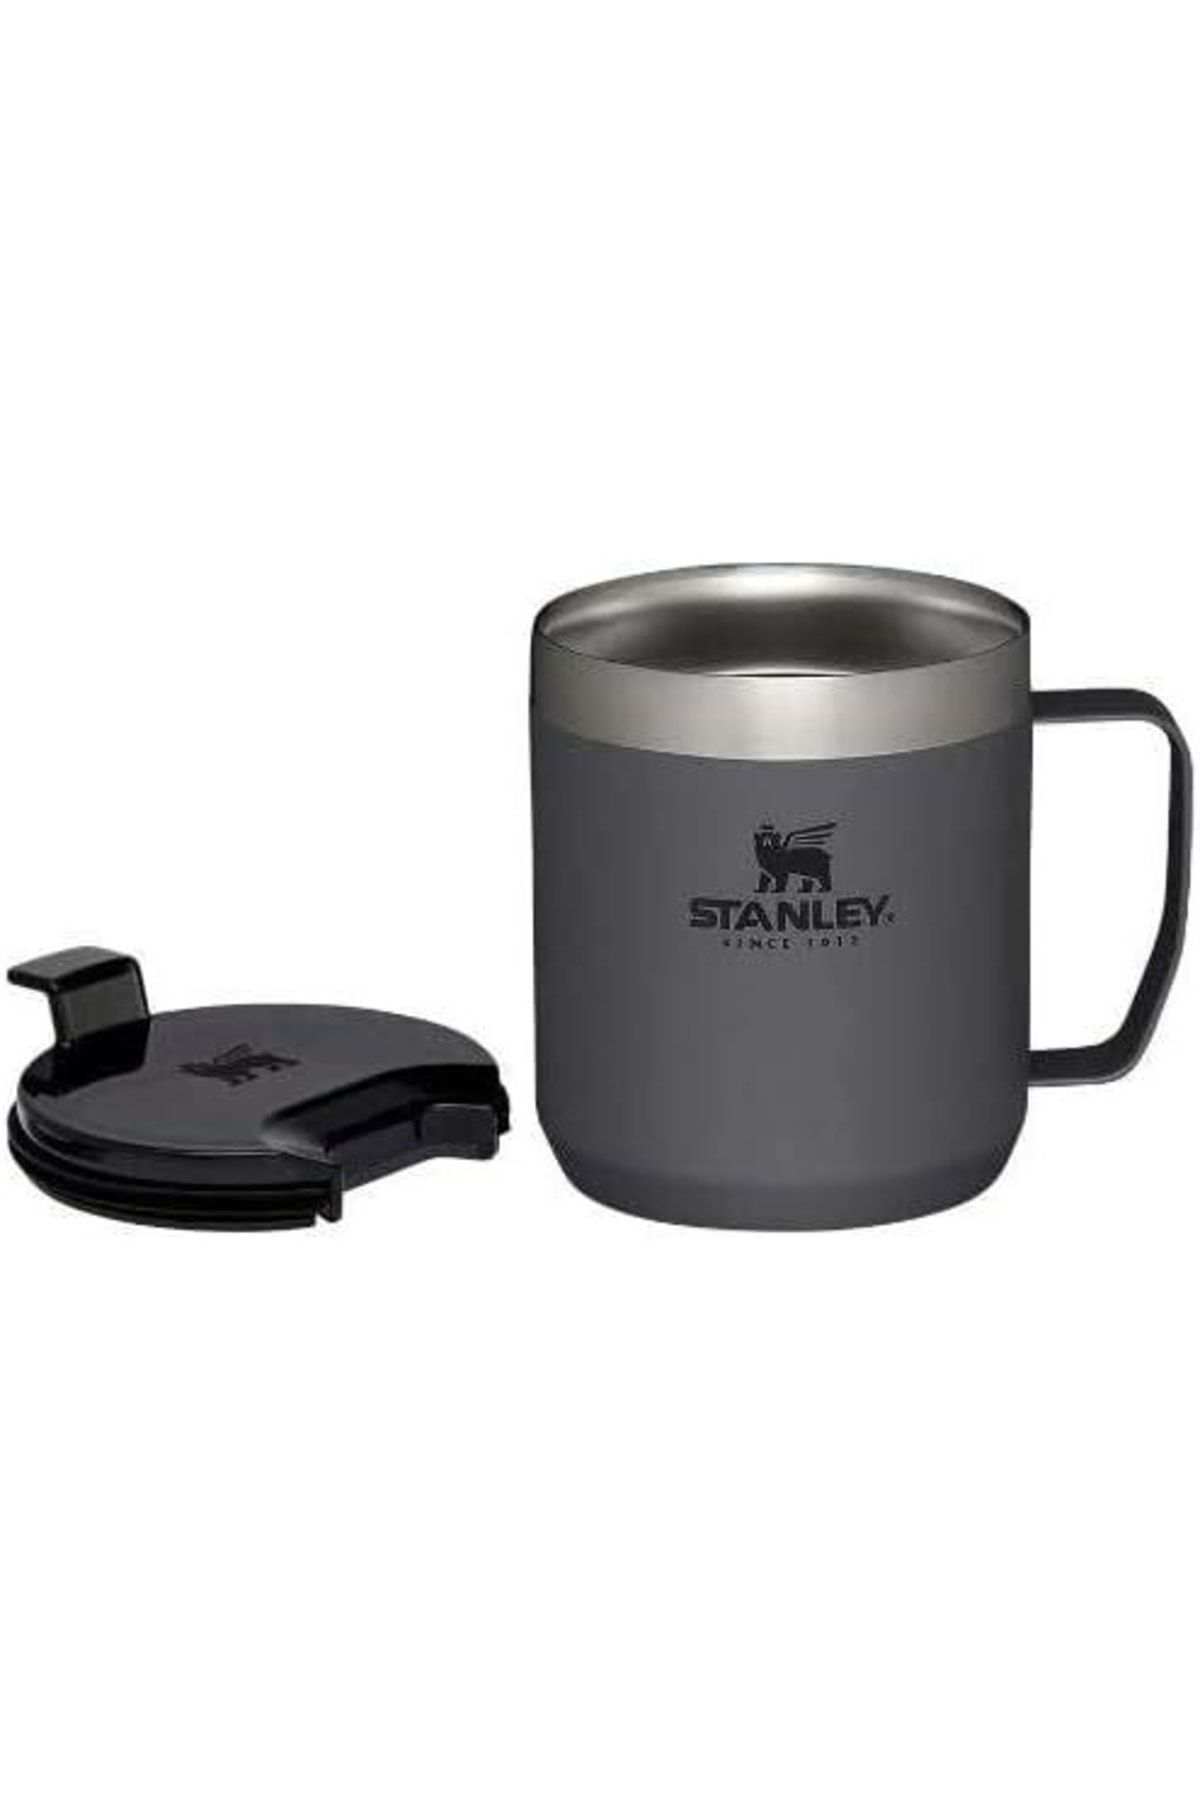 Stanley Classic Legendary Camp Mug [Nightfall] 10-09366-001